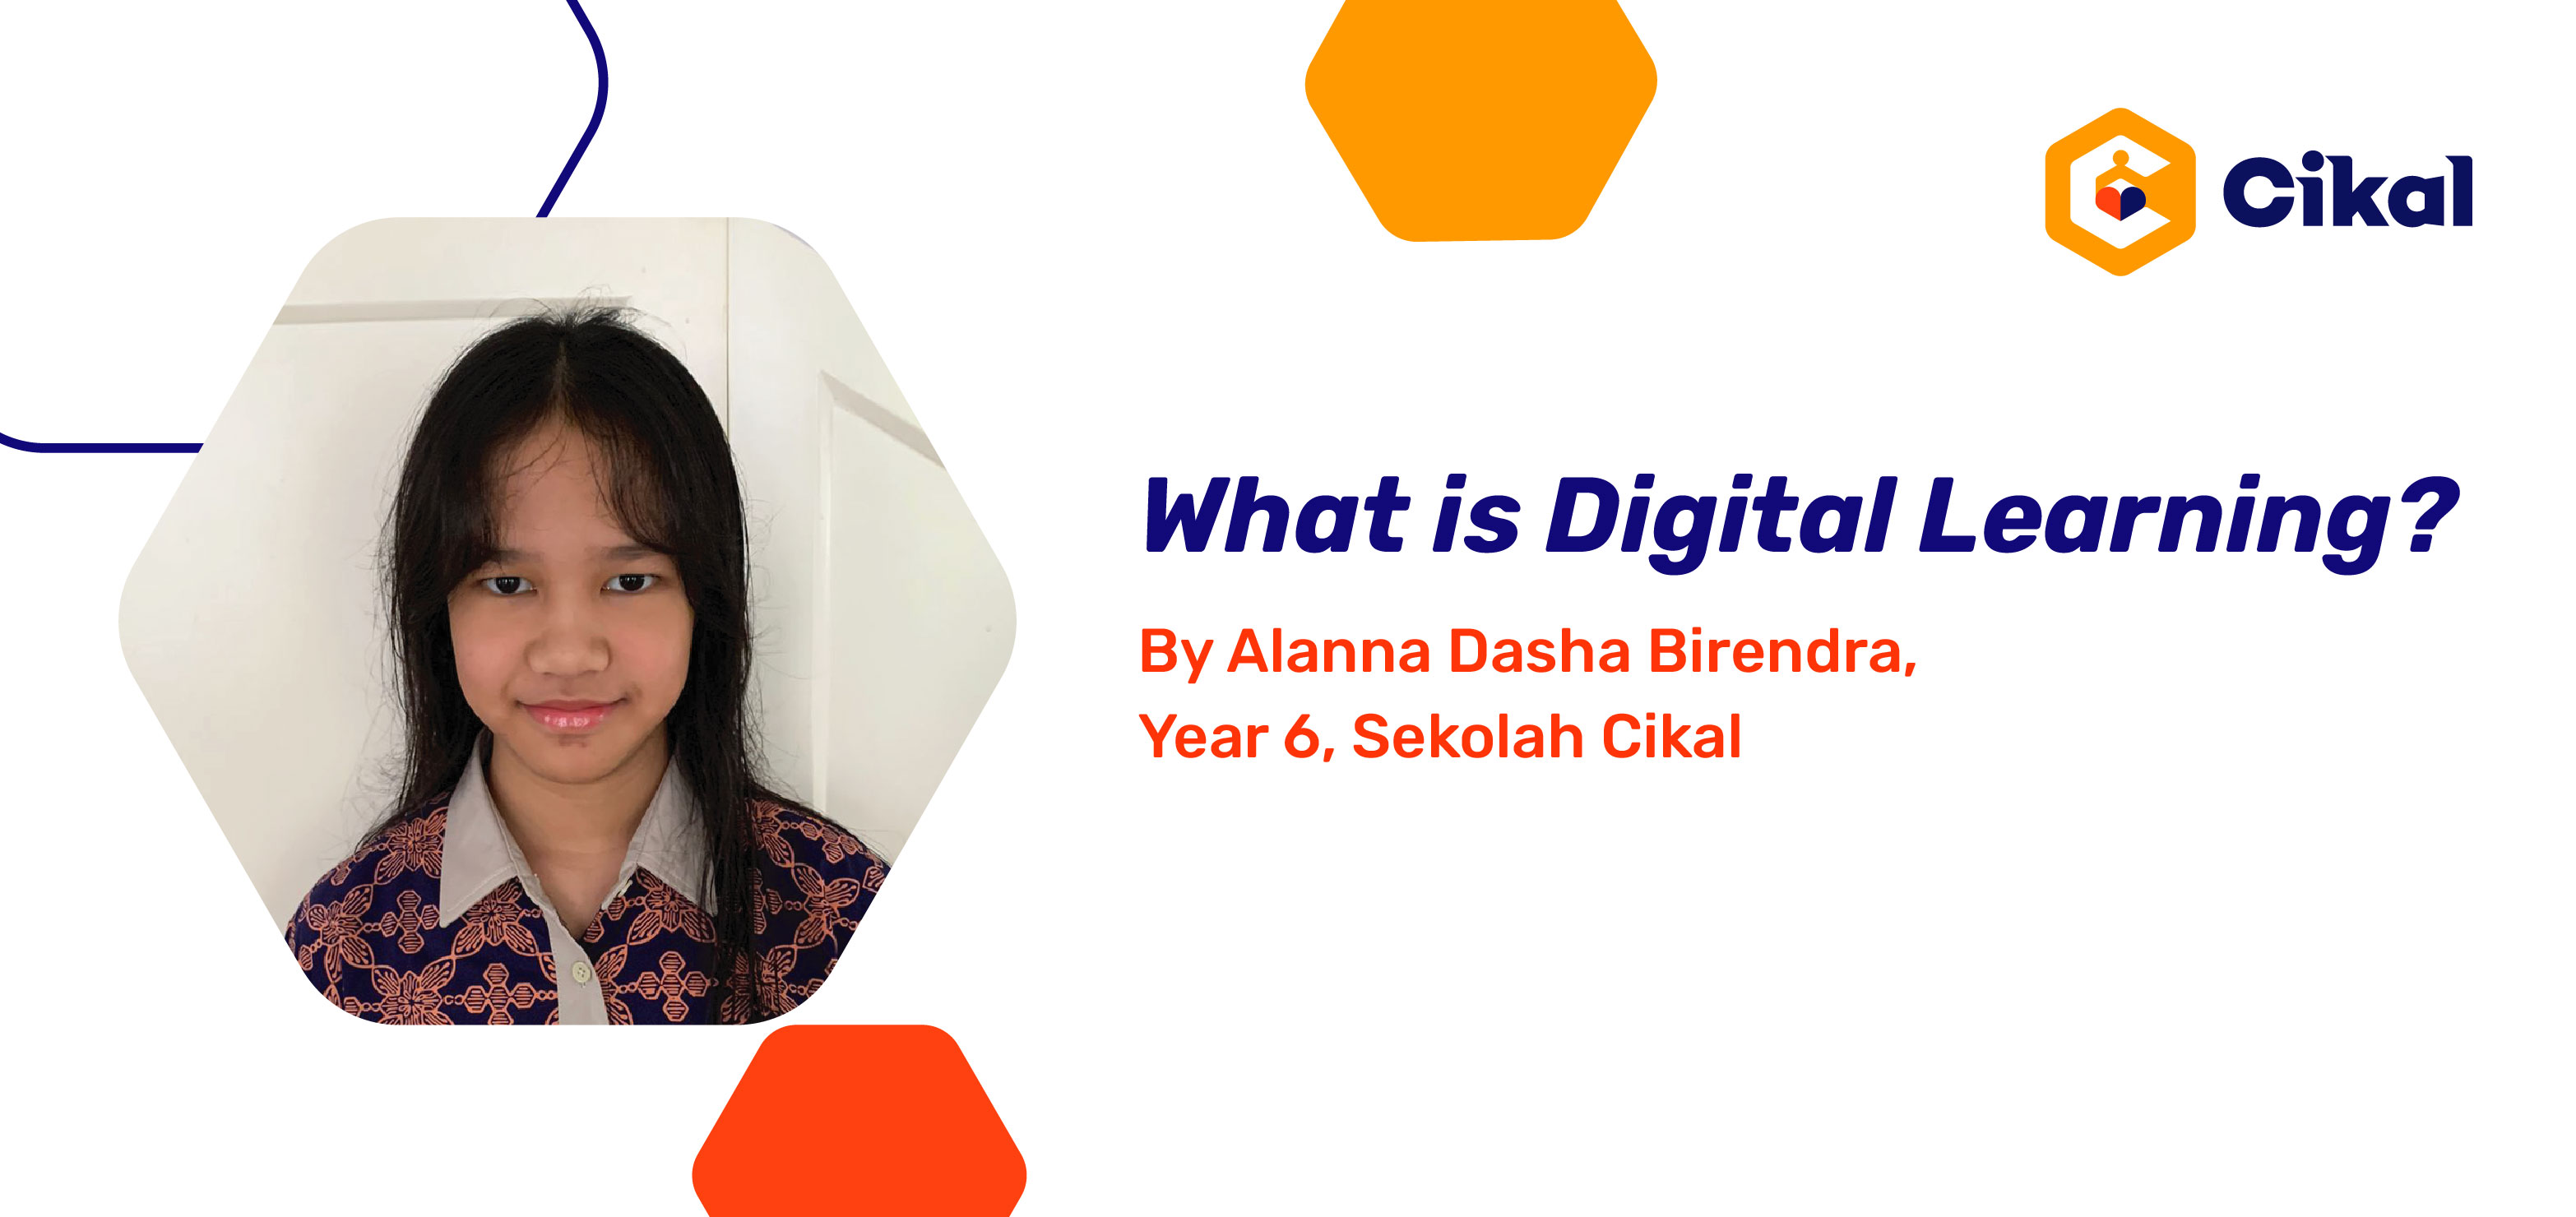 What is Digital Learning? By Alanna Dasha Birendra, Year 6, Sekolah Cikal 